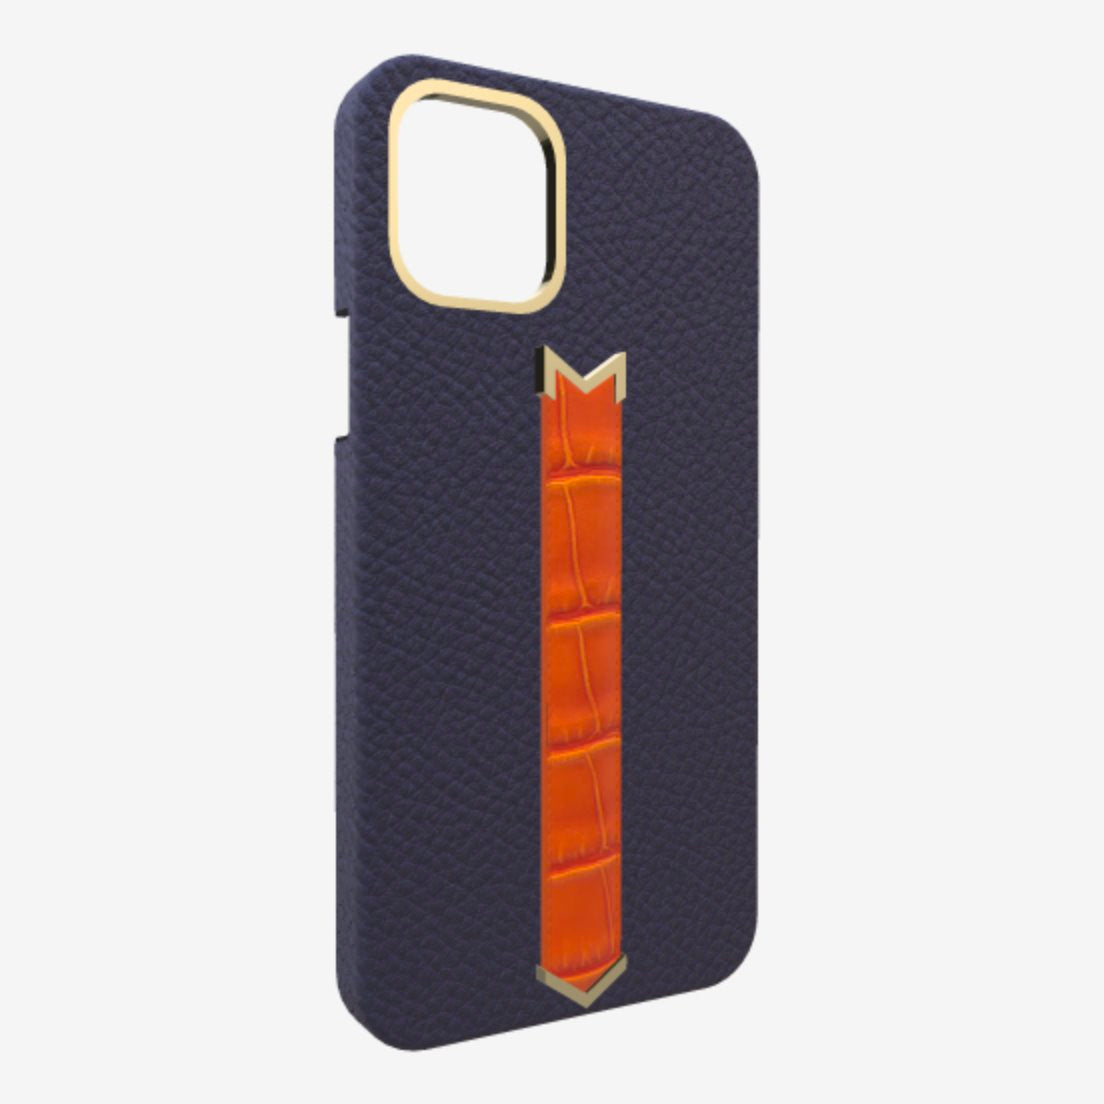 Gold Finger Strap Case for iPhone 13 Pro Max in Genuine Calfskin and Alligator Navy Blue Orange Cocktail 